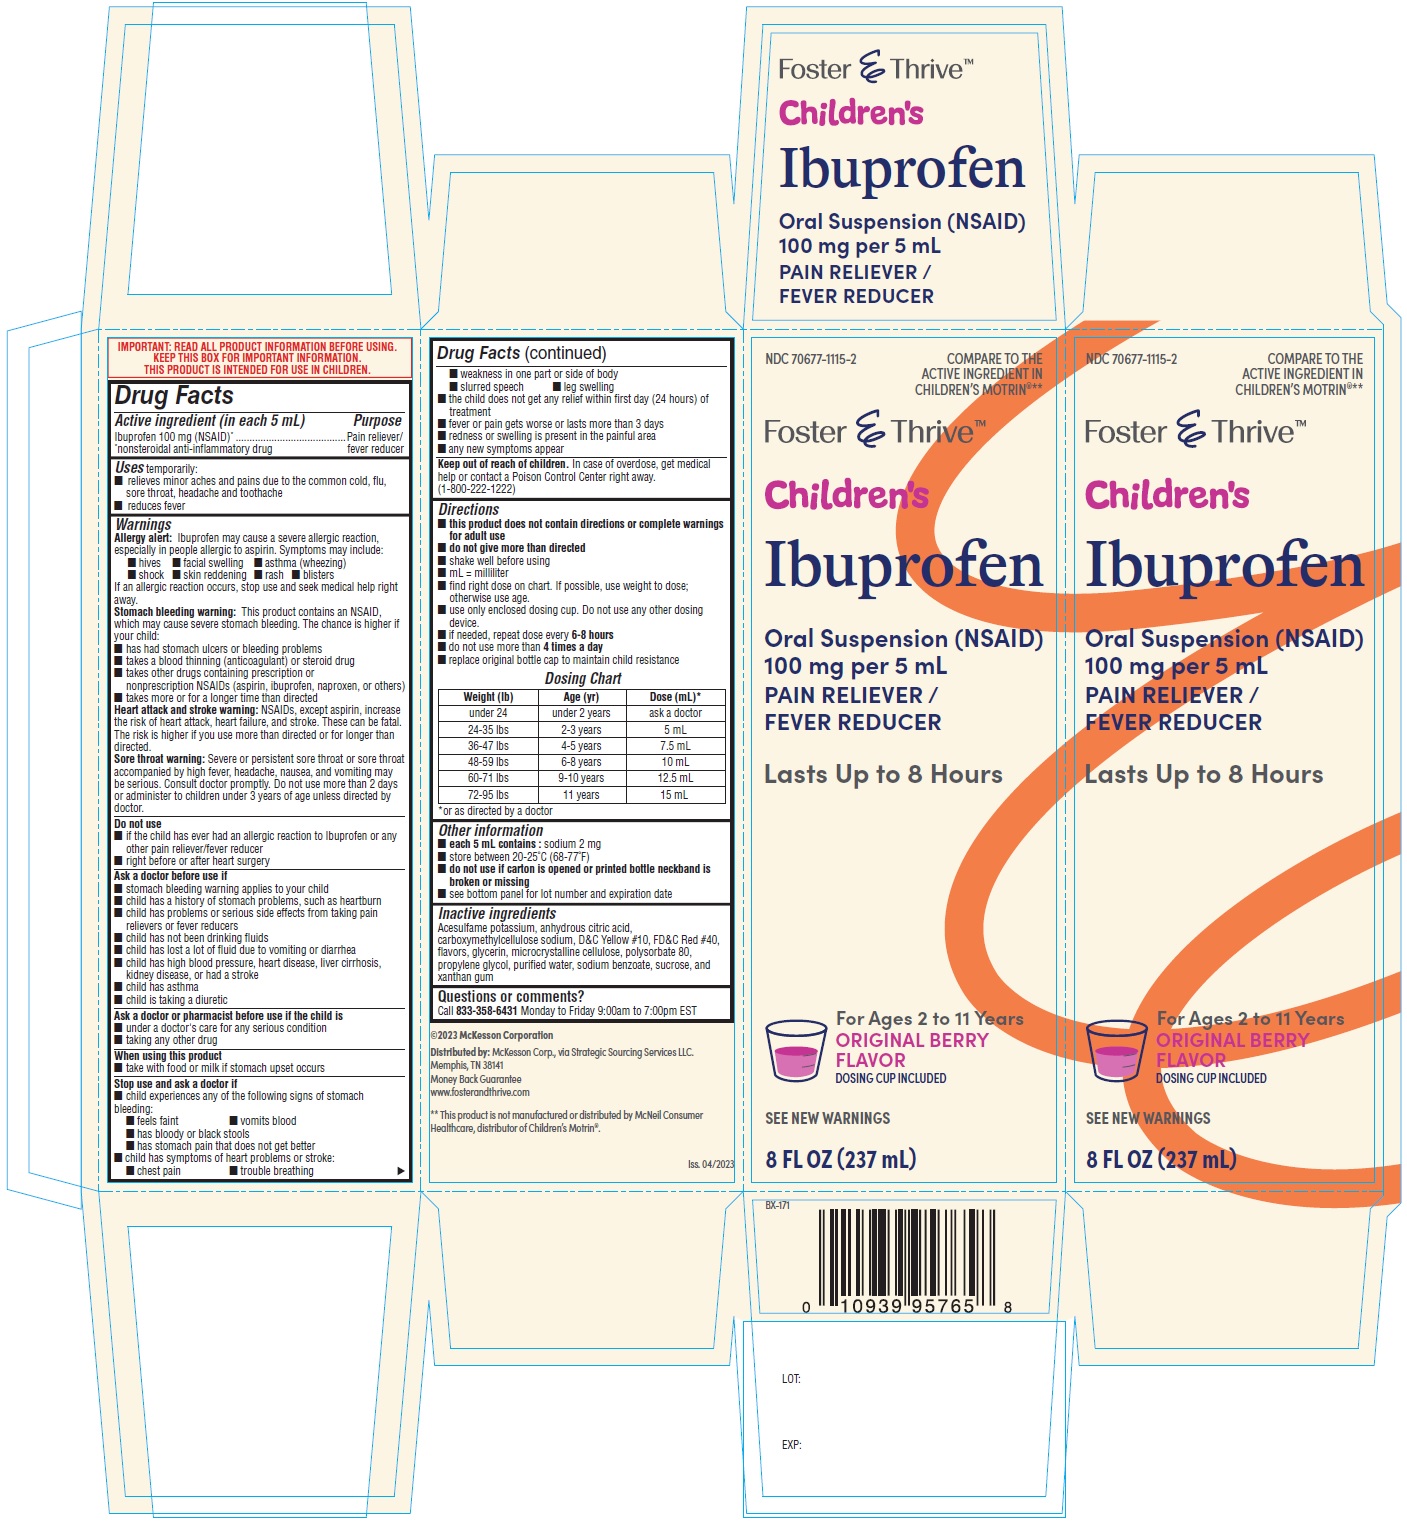 Ibuprofen oral suspension berry original flavor container carton